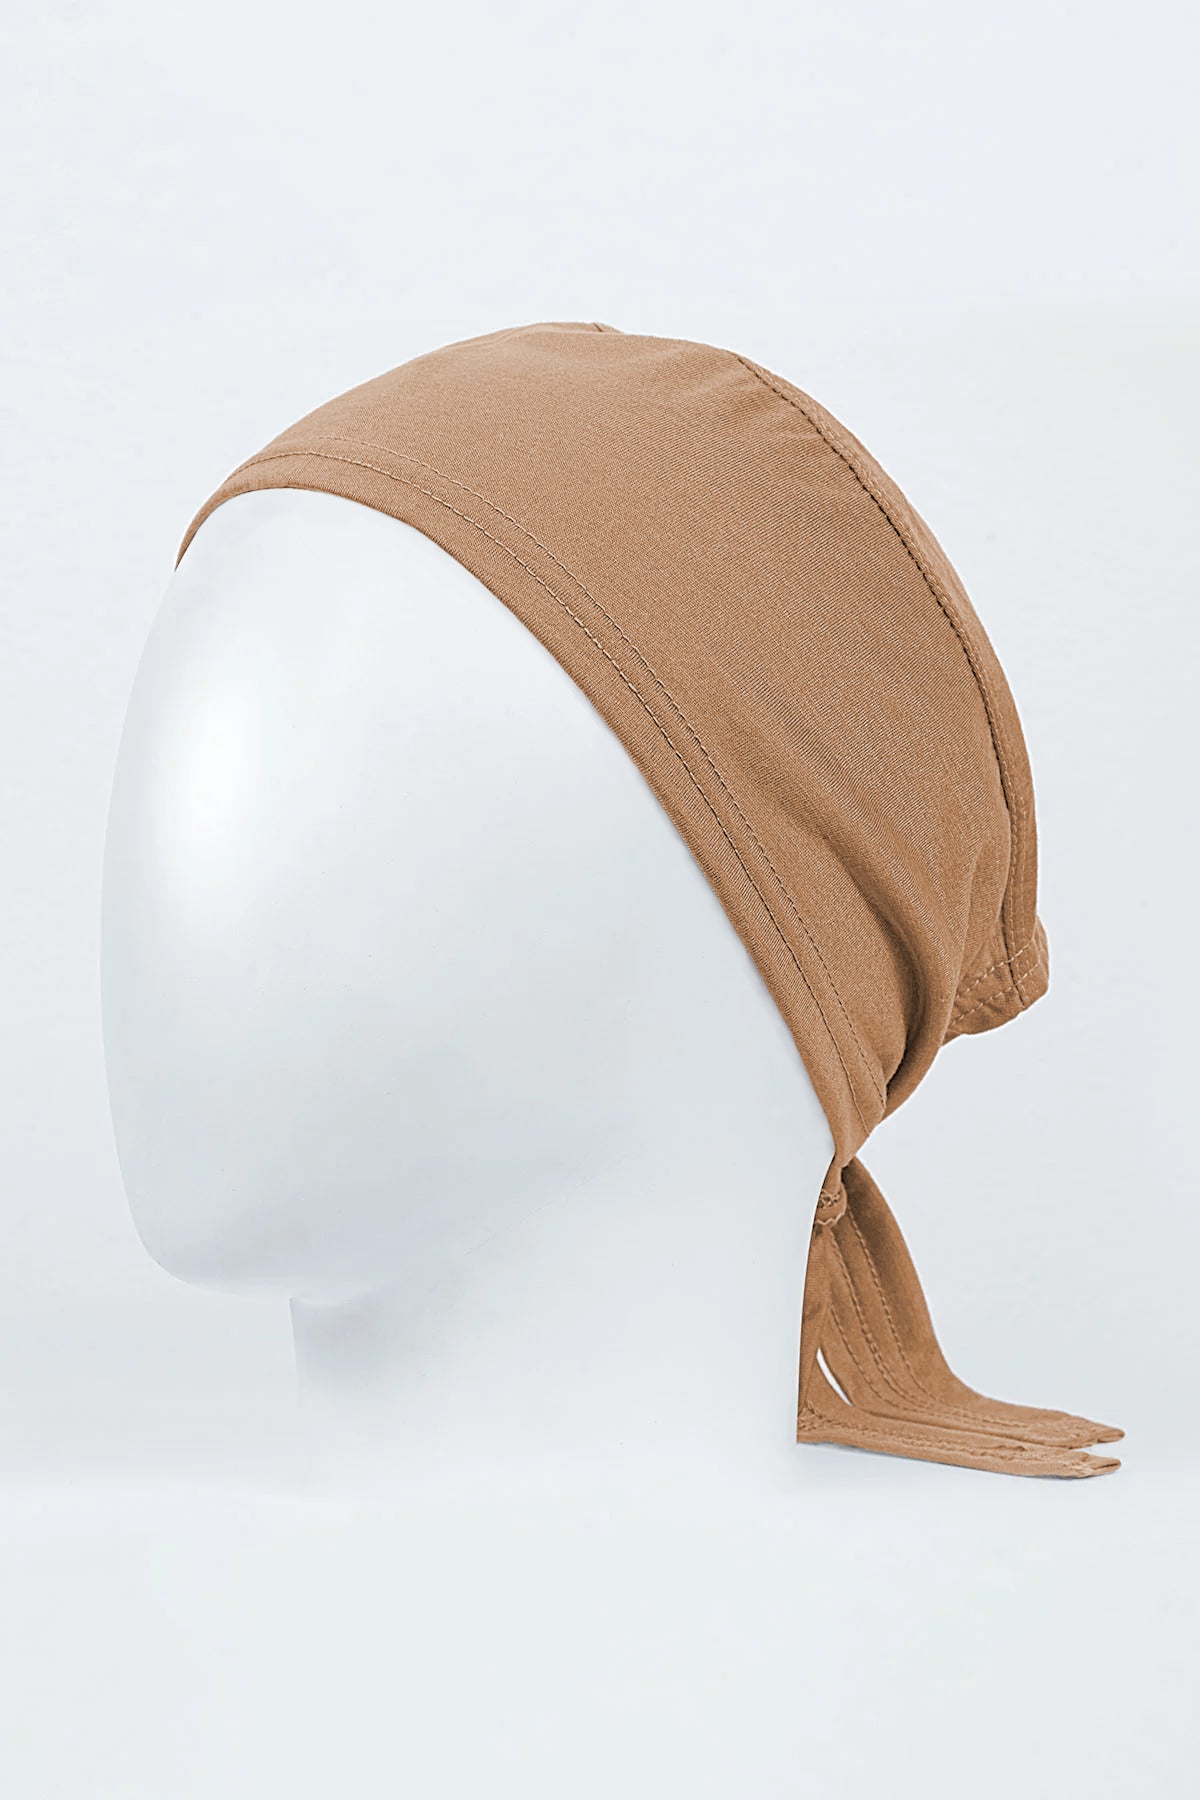 hijab inner cap in camel colour